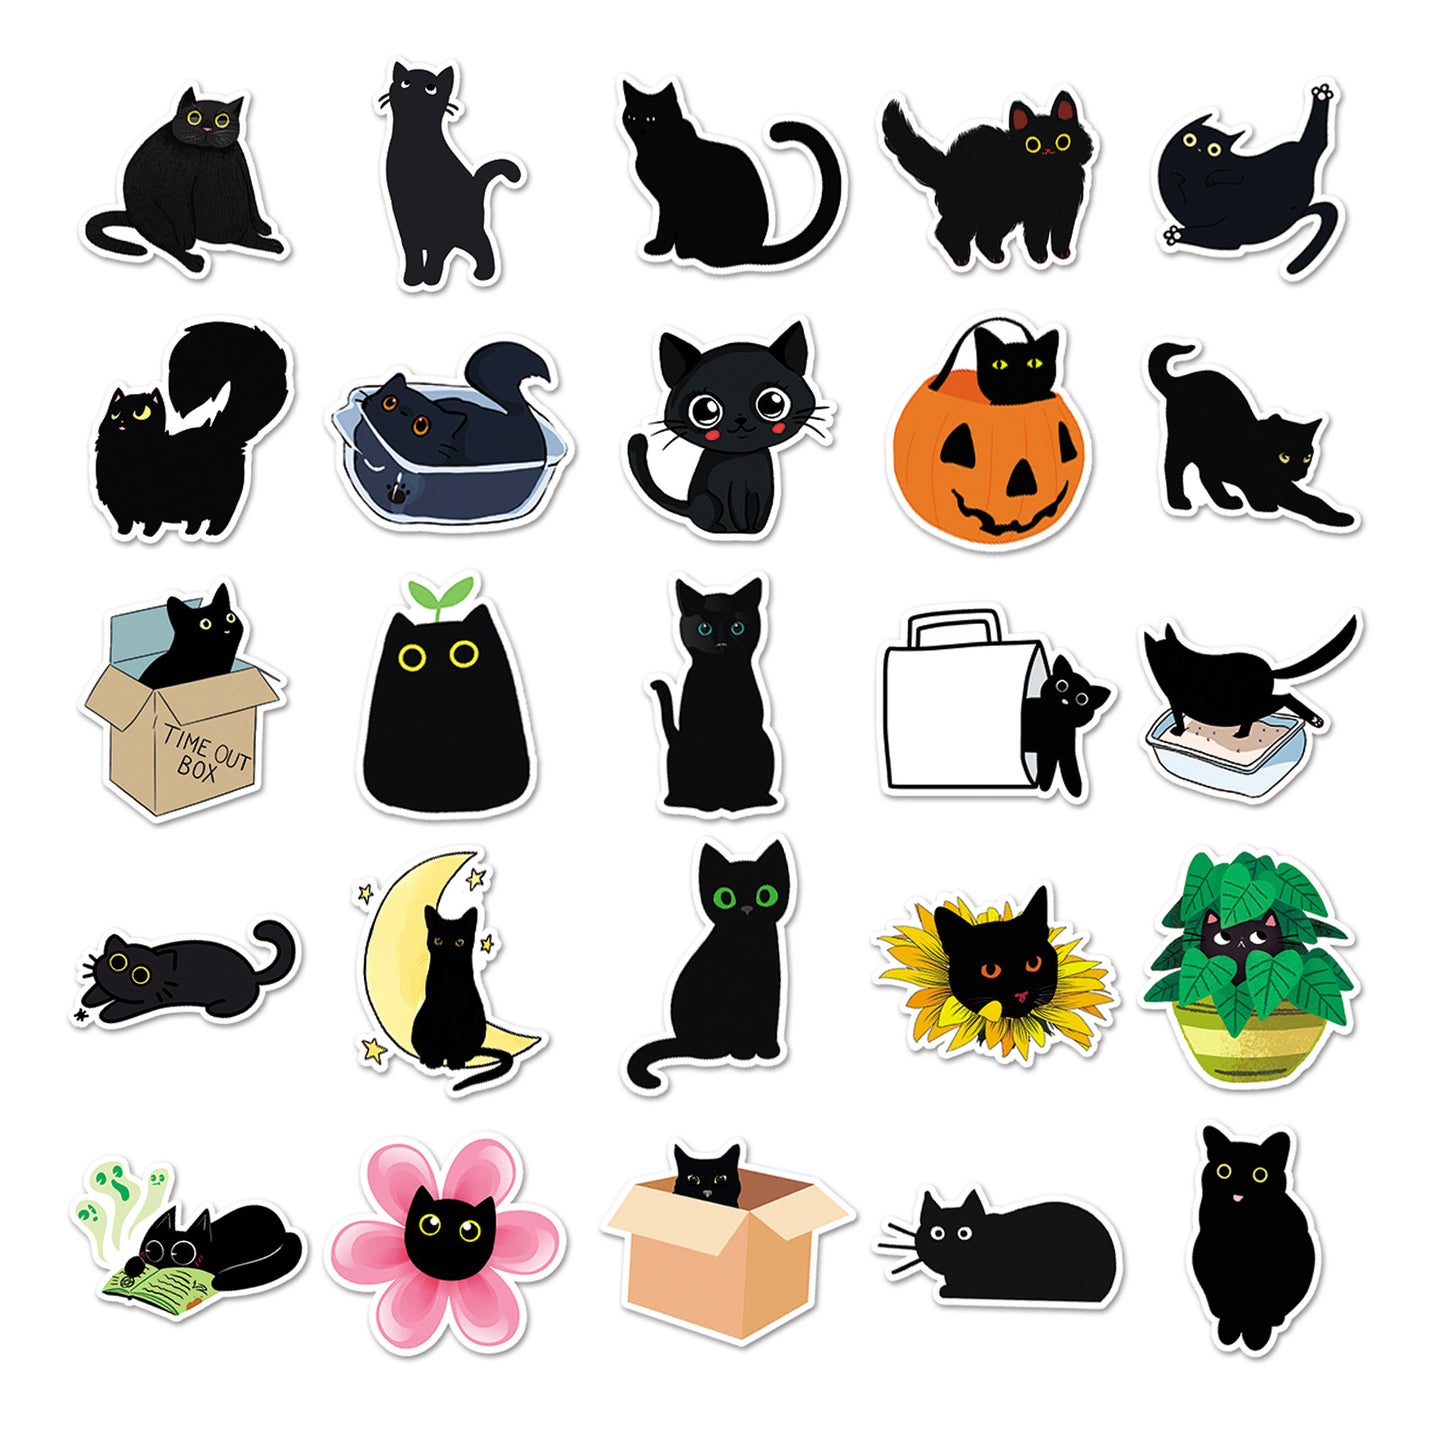 Black Cat Stickers 50pcs - 50 different stickers